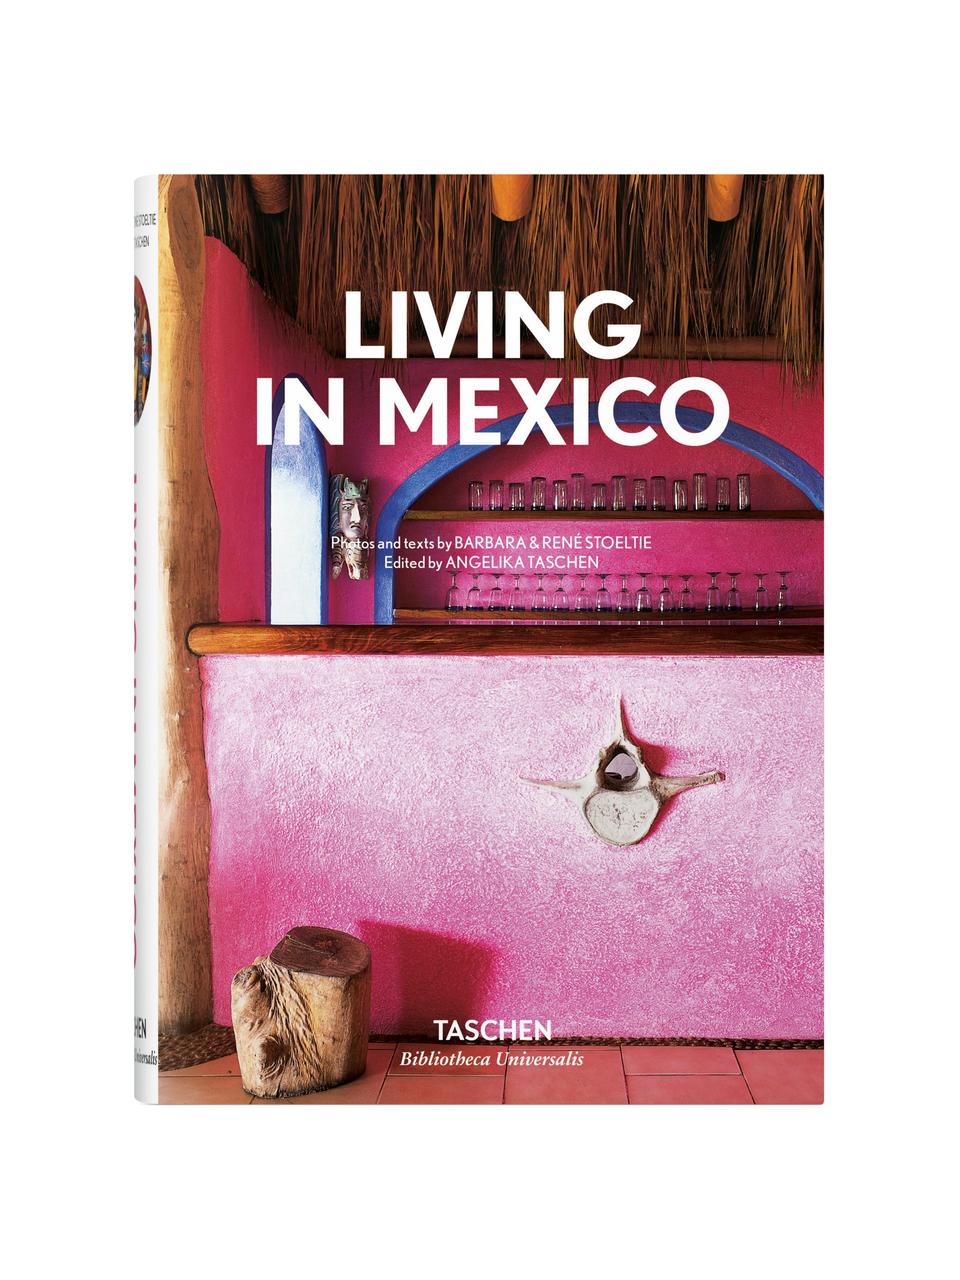 Geïllustreerd boek Living in Mexico, Papier, hardcover, Roze, multicolour, B 14 x L 20 cm